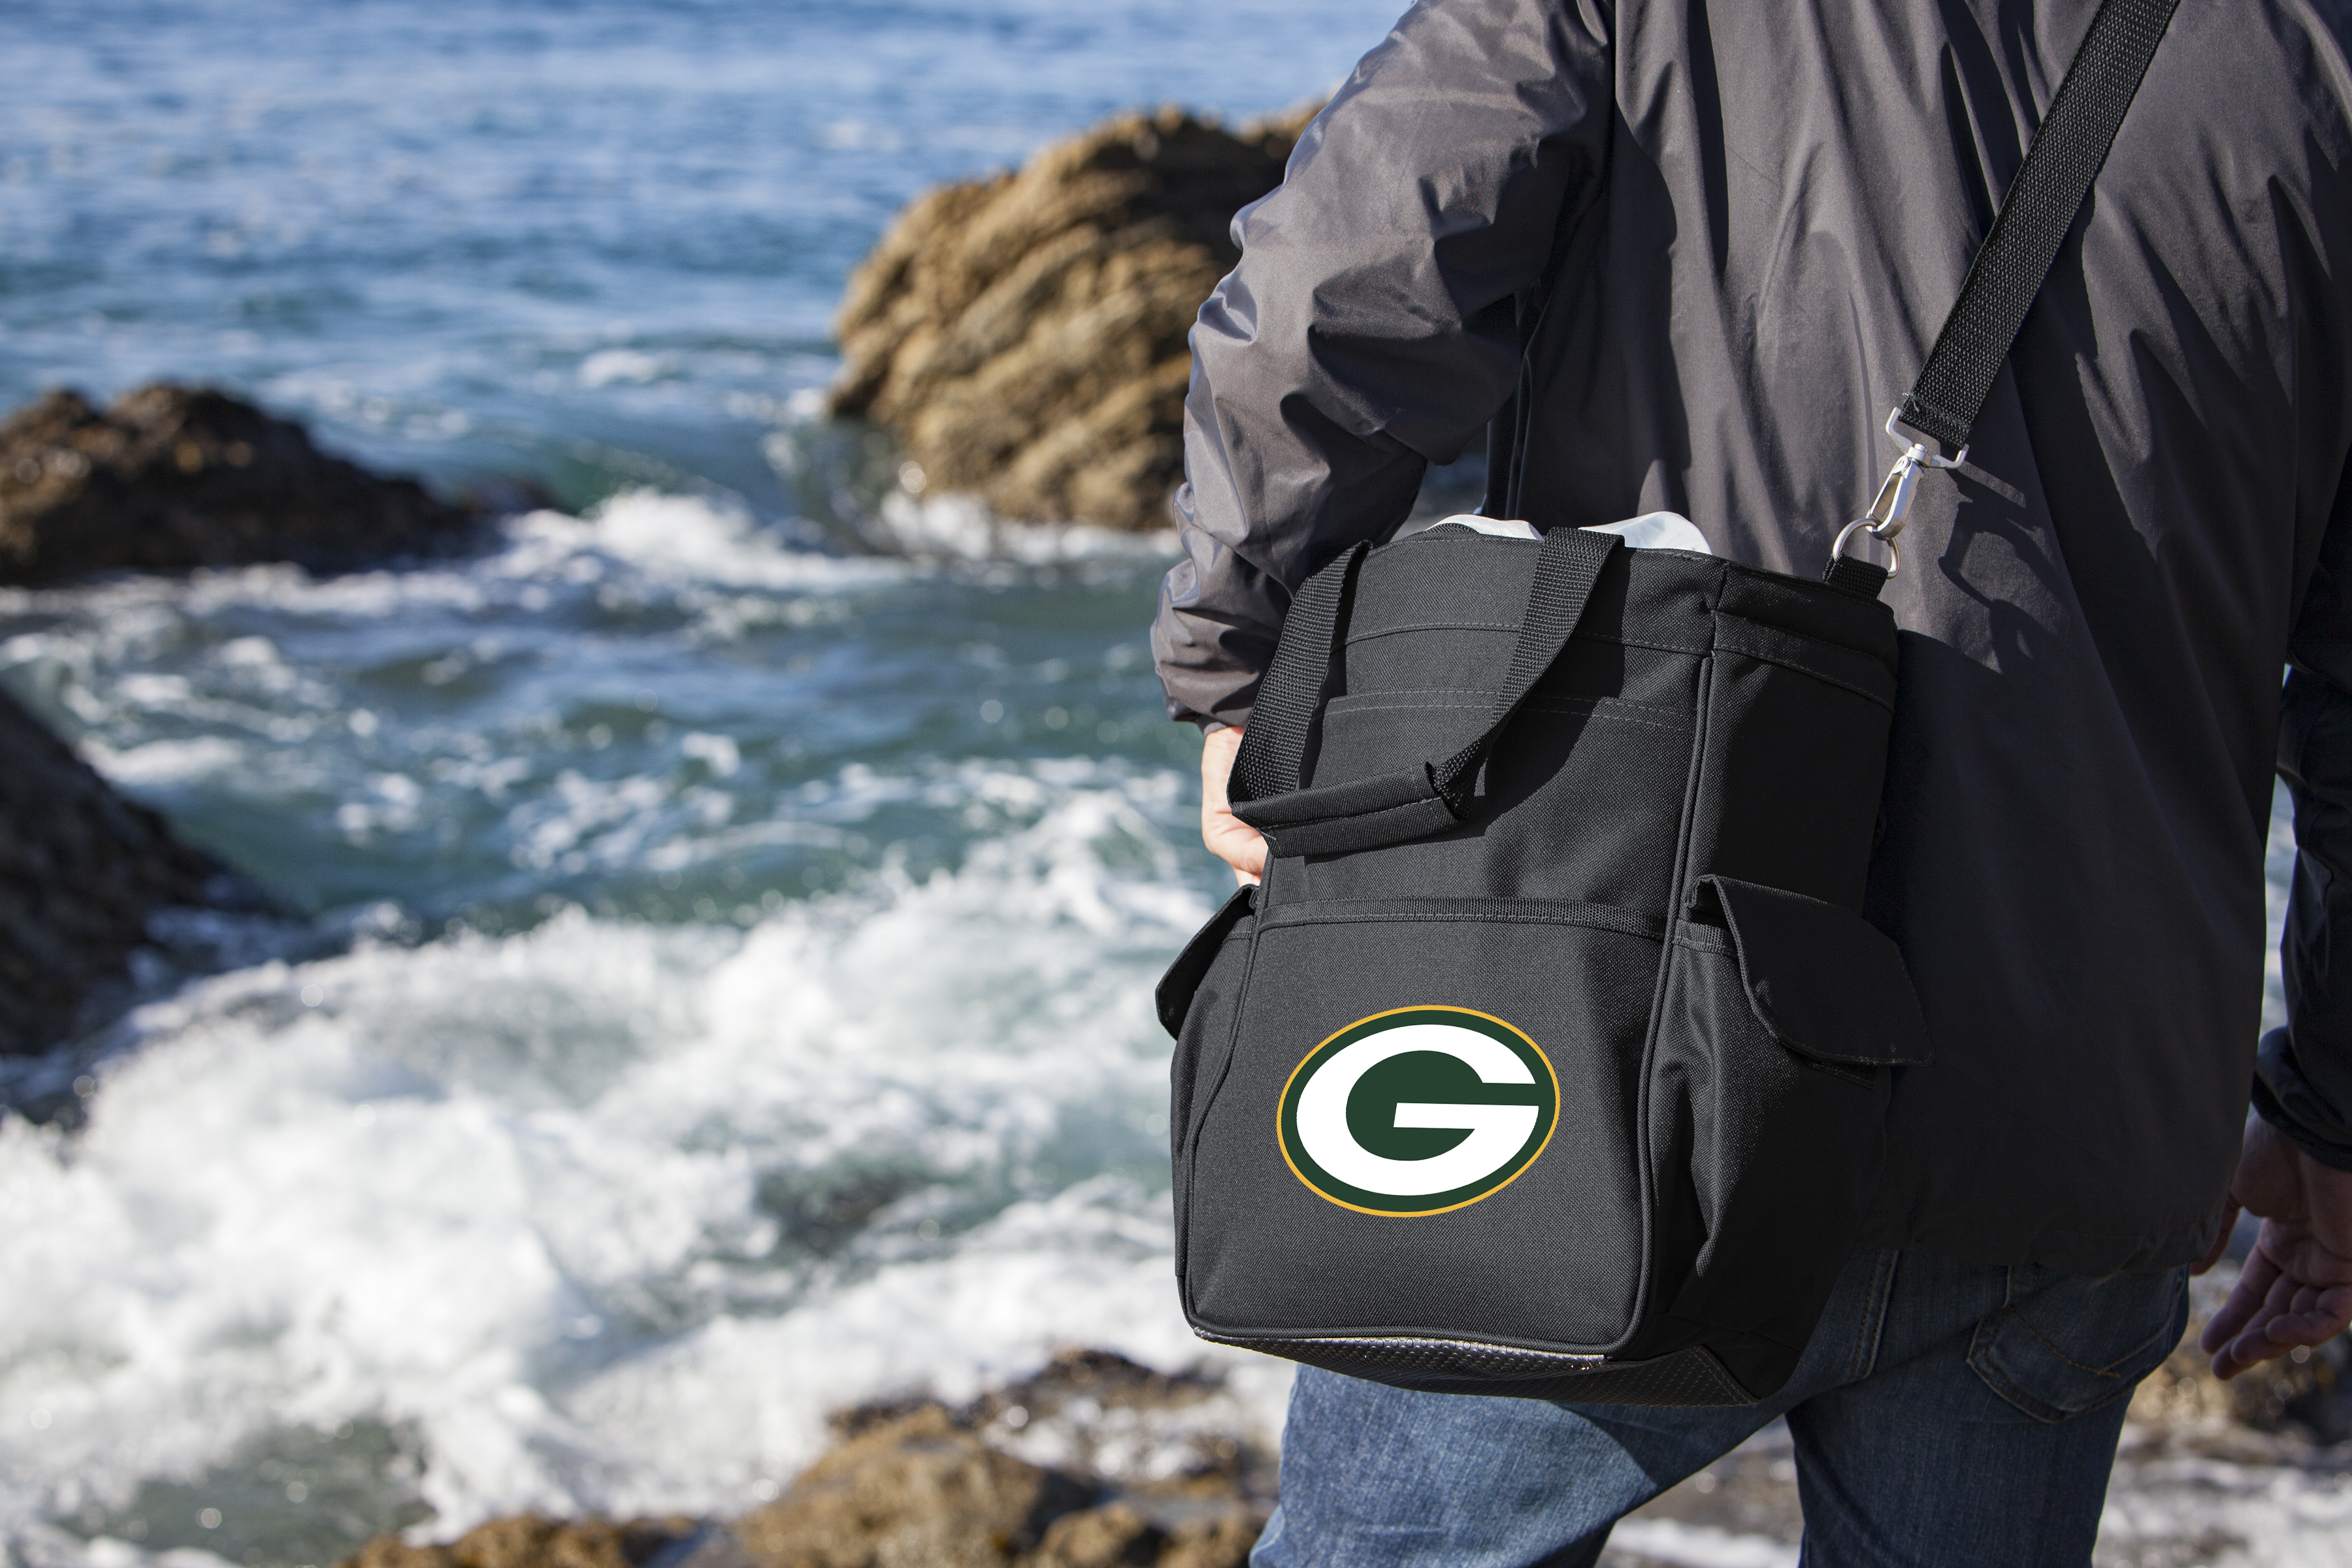 Green Bay Packers - Activo Cooler Tote Bag